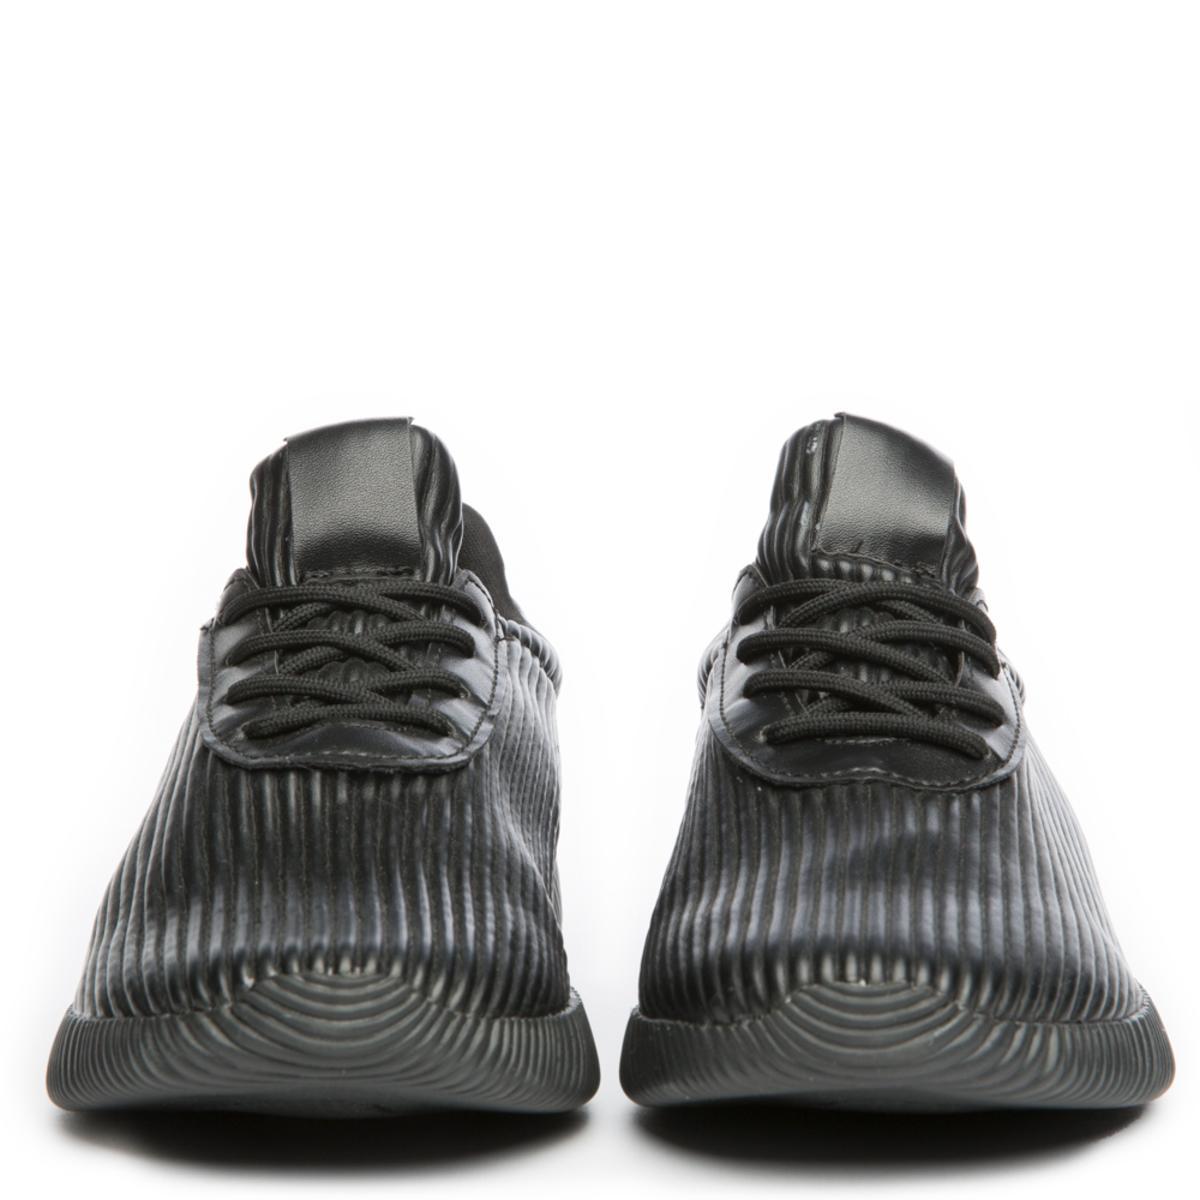 Cape Robbin Nena-3 Black Sneakers BLACK